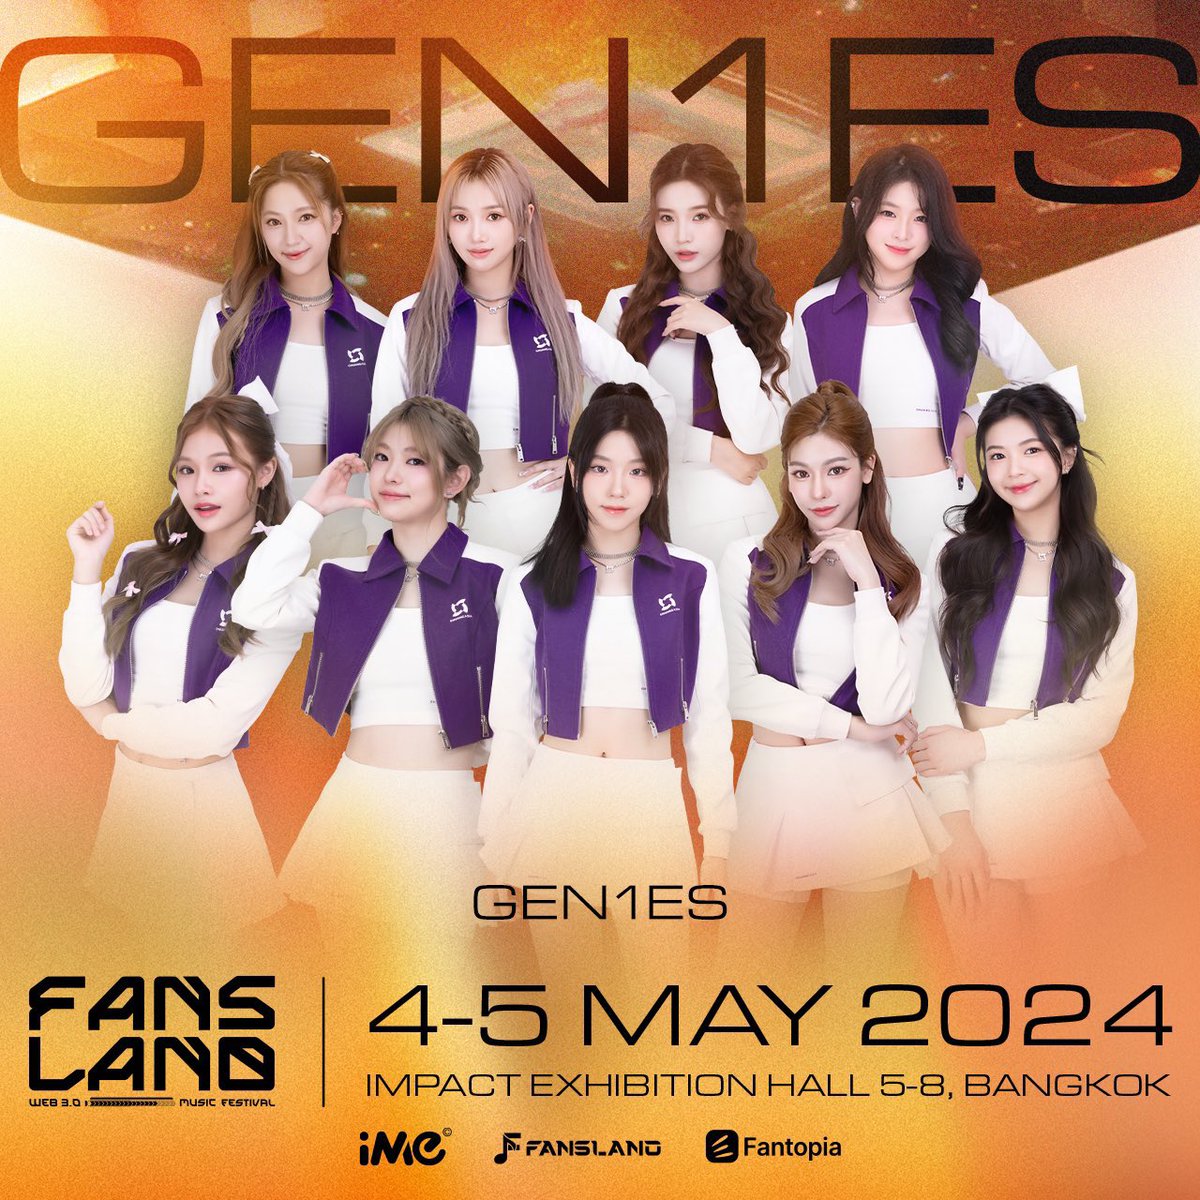 Gen1es X Fansland Music Festival

(🧚‍♂️ )สาวๆจีนีส์จะขึ้นโชว์ครั้งแรกในเทศกาลงานดนตรี FANSLAND

🗓️ : 4-5/ 5/67
📍: Impact Exhibition Hall 5-8

#RYCE
#Gen1es
#CHUANGASIAxRYCE
#CHUANGAsia 
#fanslandmusicfestival